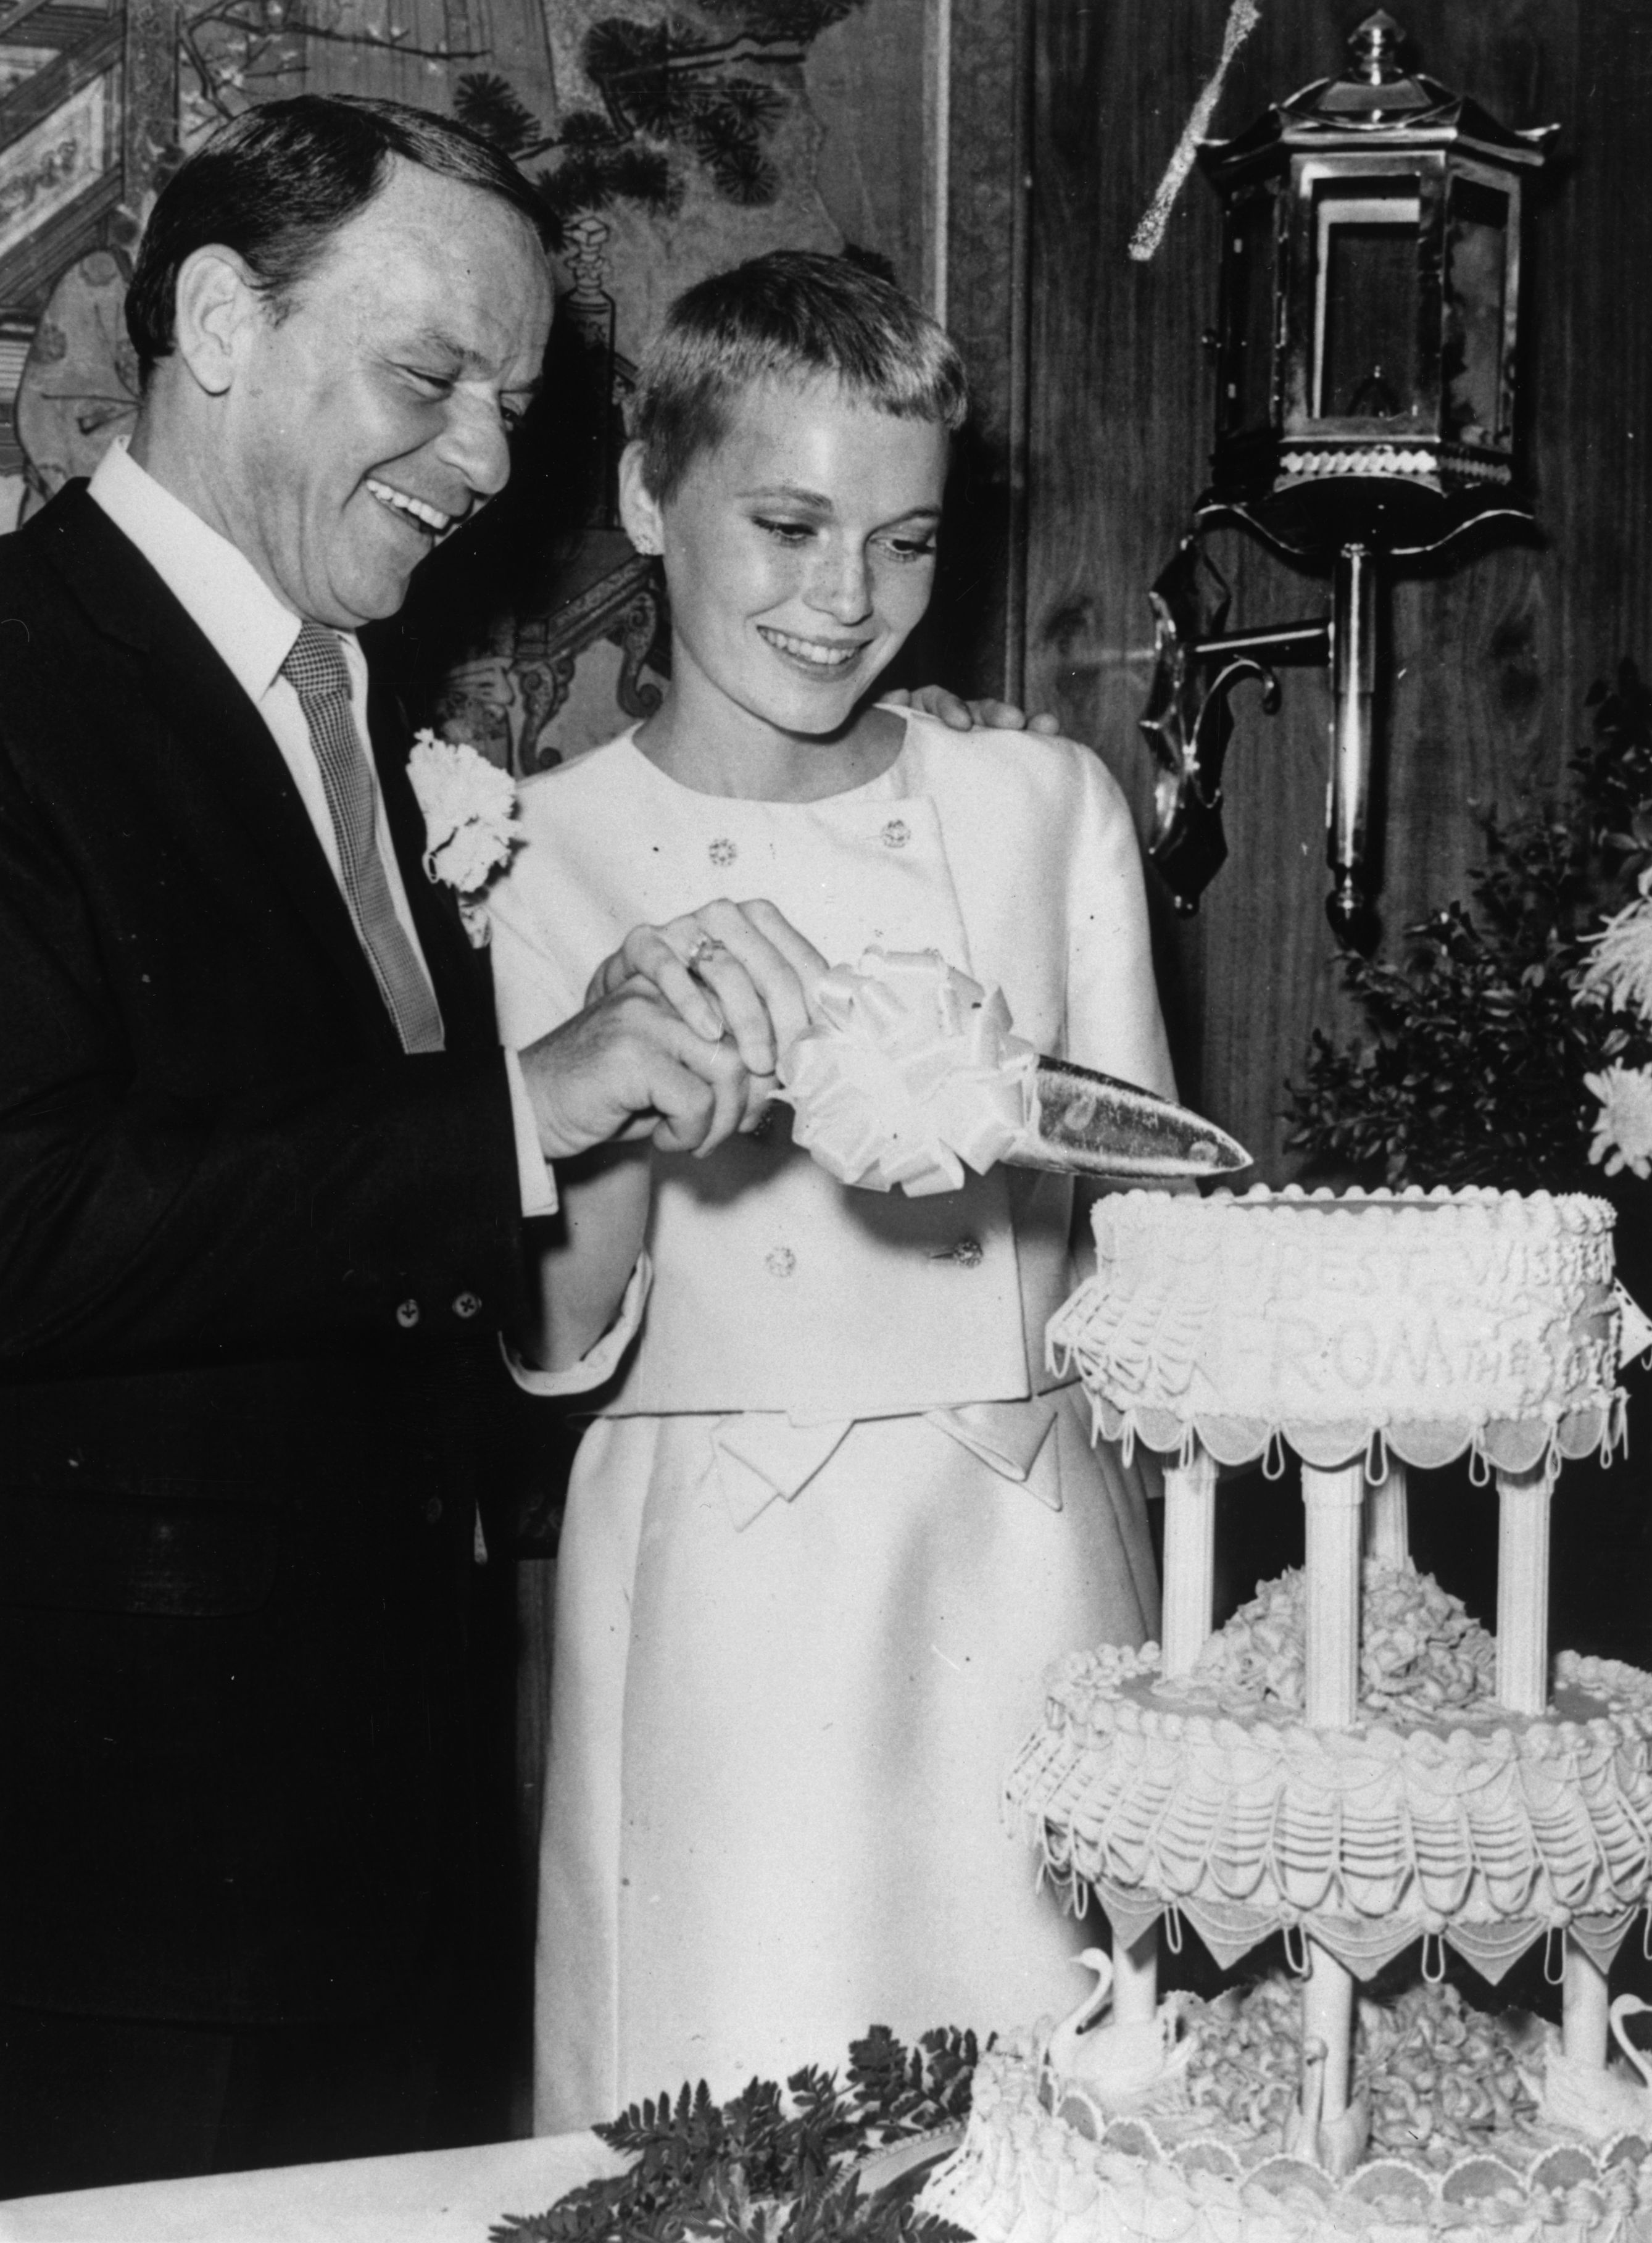 Frank Sinatra and Mia Farrow cutting their wedding cake in 1966